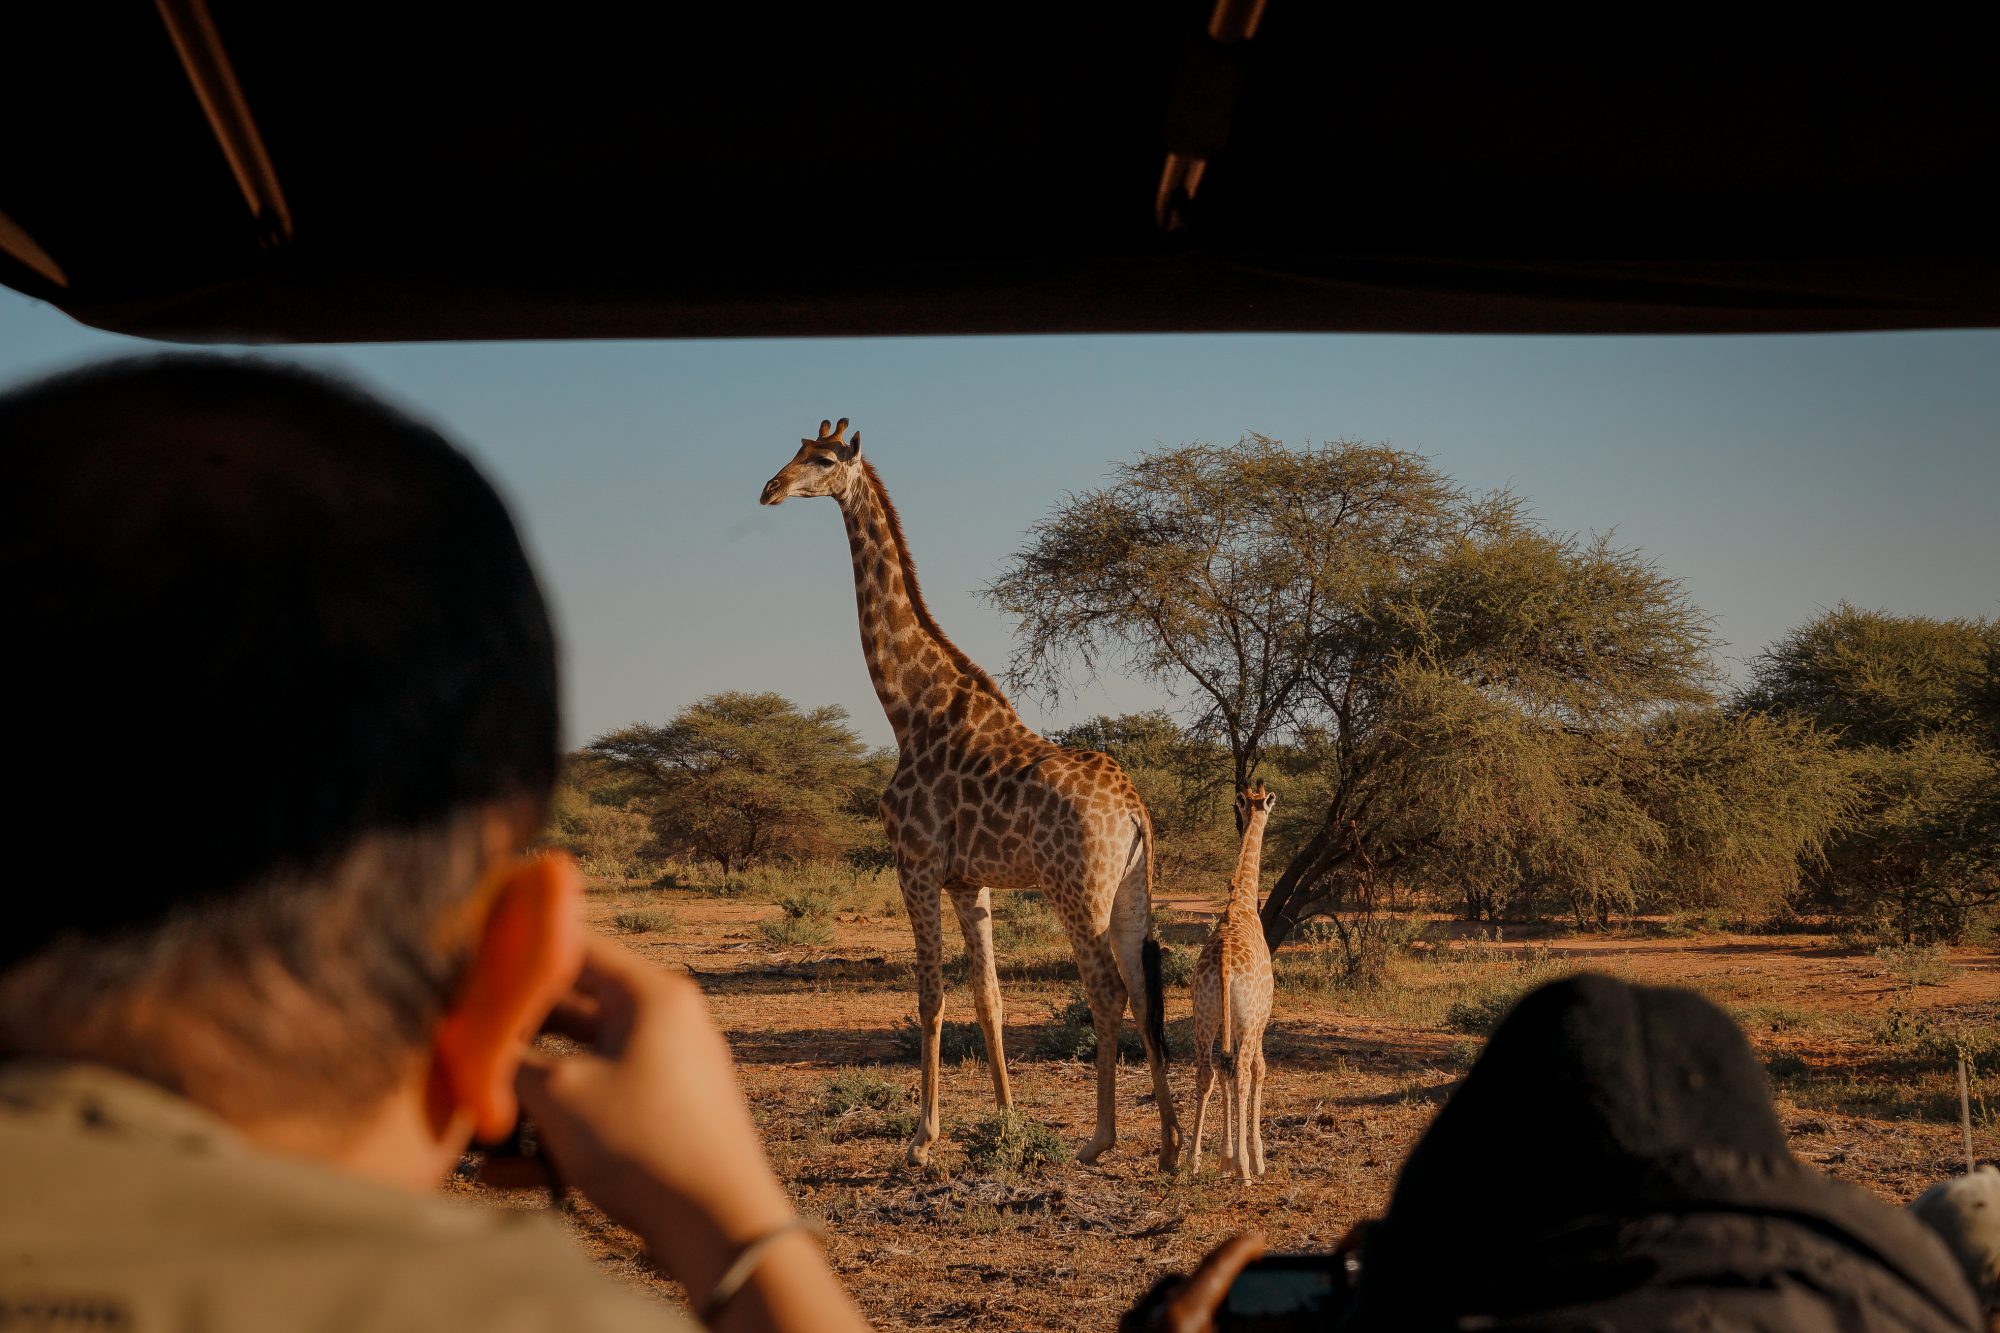 Deep in the Safari, South Africa.